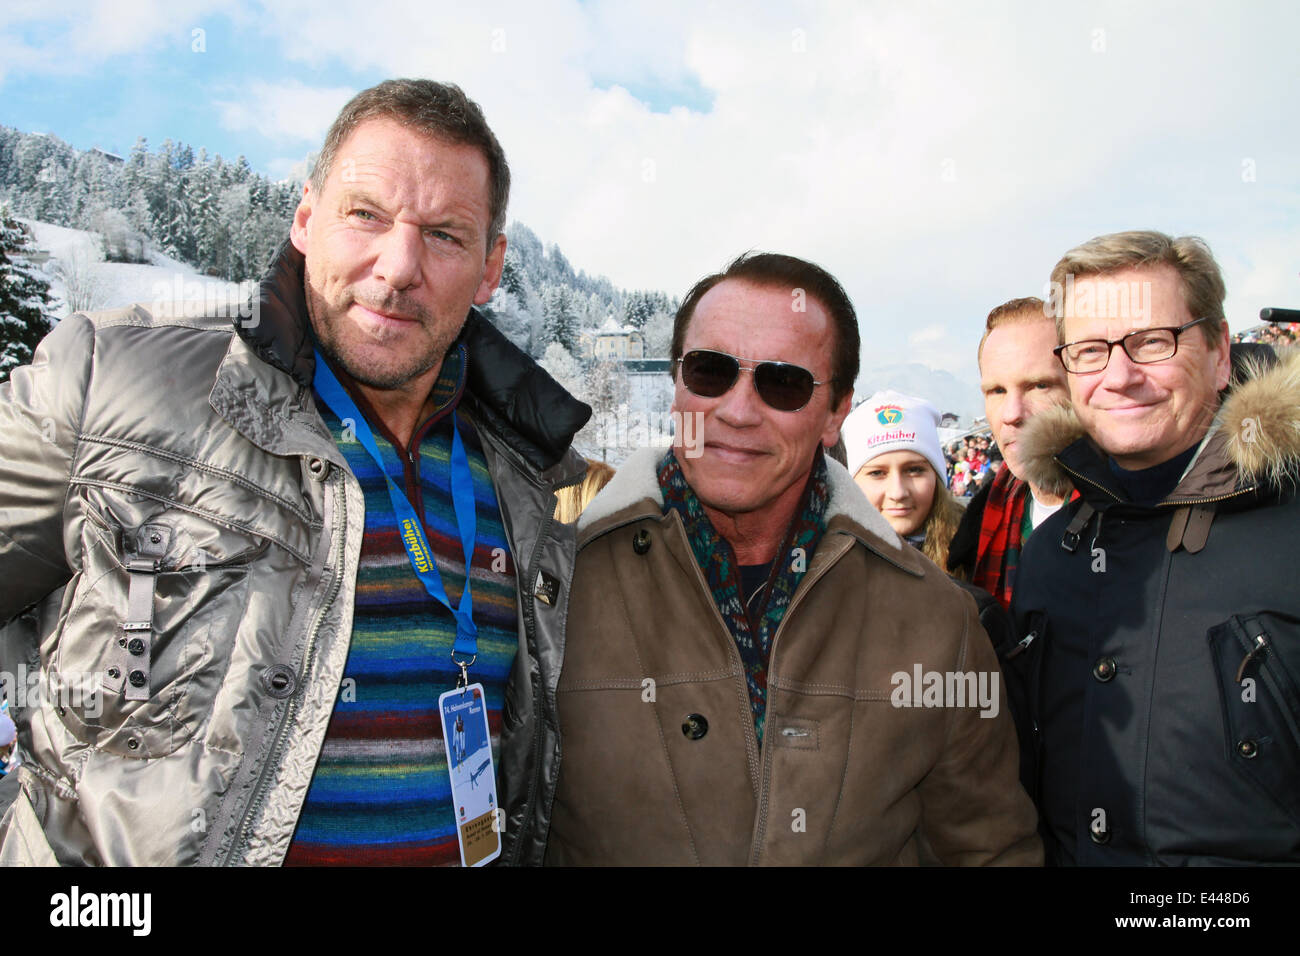 Arnold Schwarzenegger and girlfriend Heather Milligan at the 2014 FIS Alpine World Cup  Featuring: Ralf Moller,Arnold Schwarzenegger,Guido Westerwelle Where: Kitzbuehel, Austria When: 25 Jan 2014 Stock Photo